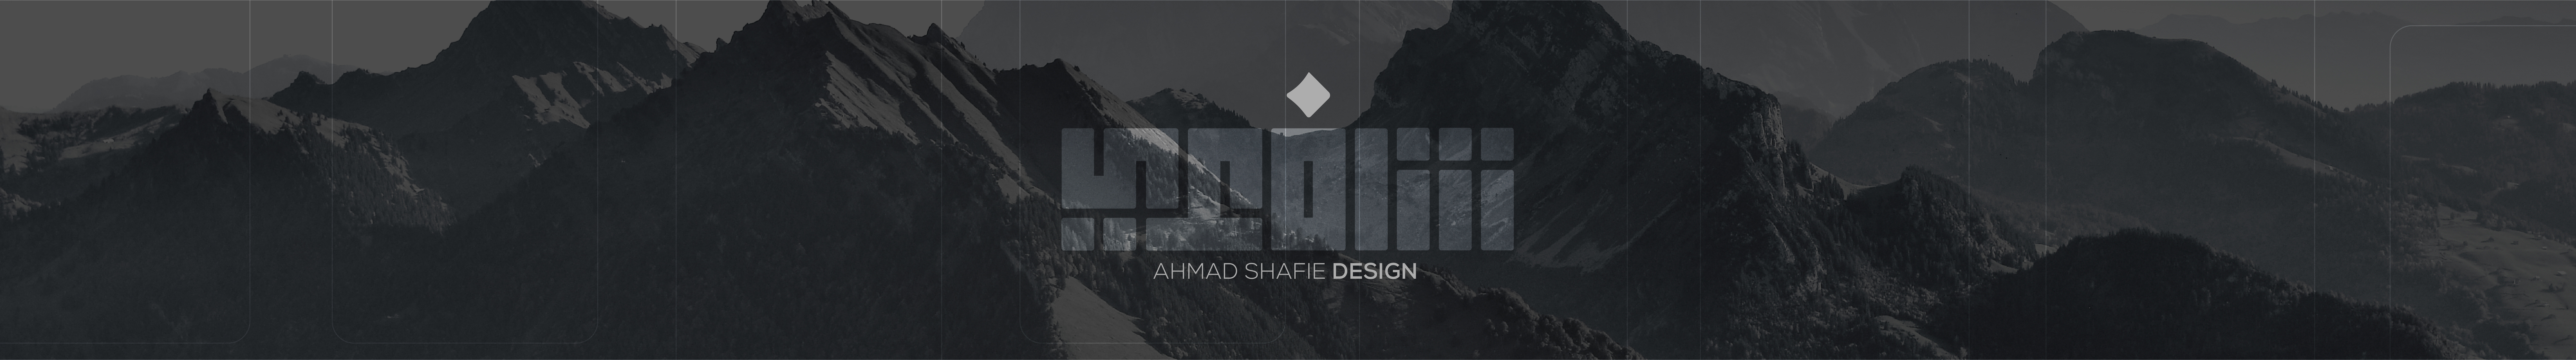 ahmad shafie's profile banner